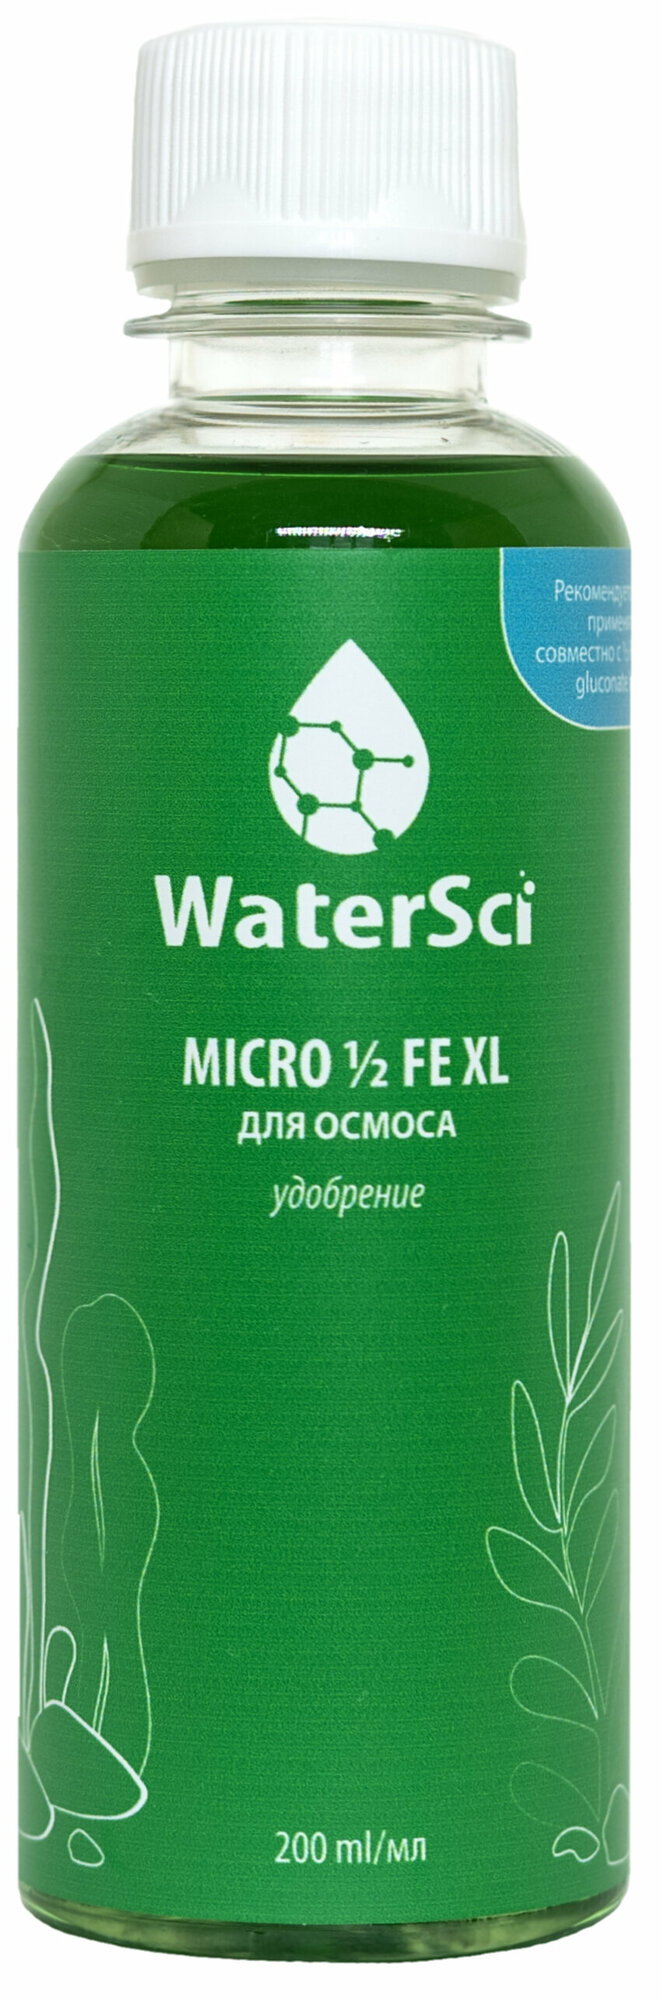 Микро для аквариума WaterSci. Micro 1/2 Fe XL, 200 мл